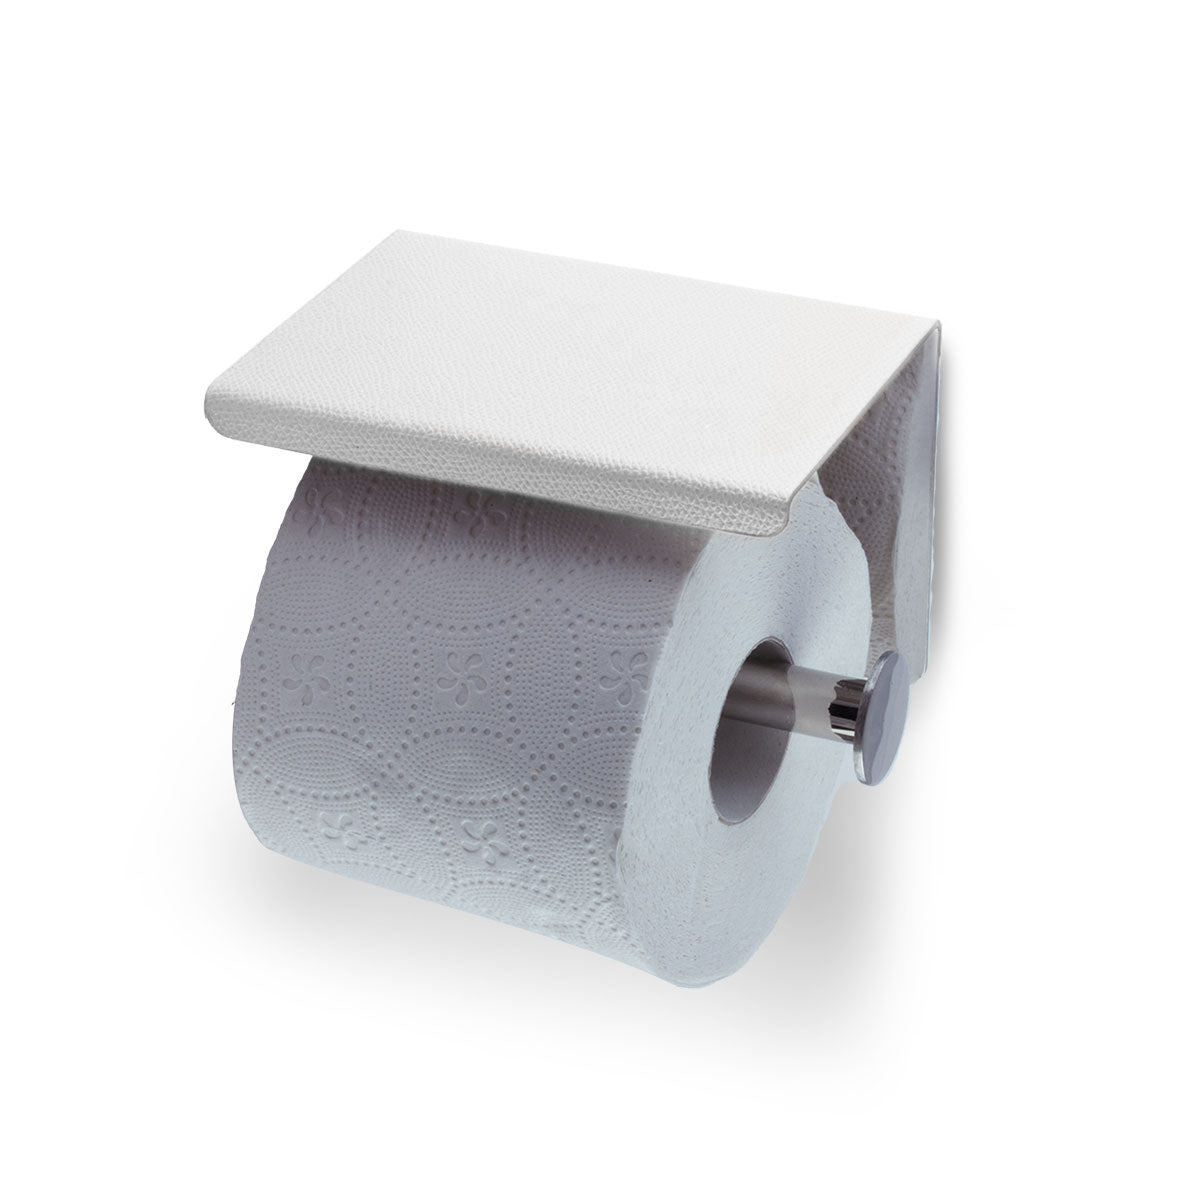 Leather toilet paper dispenser - Grained calf